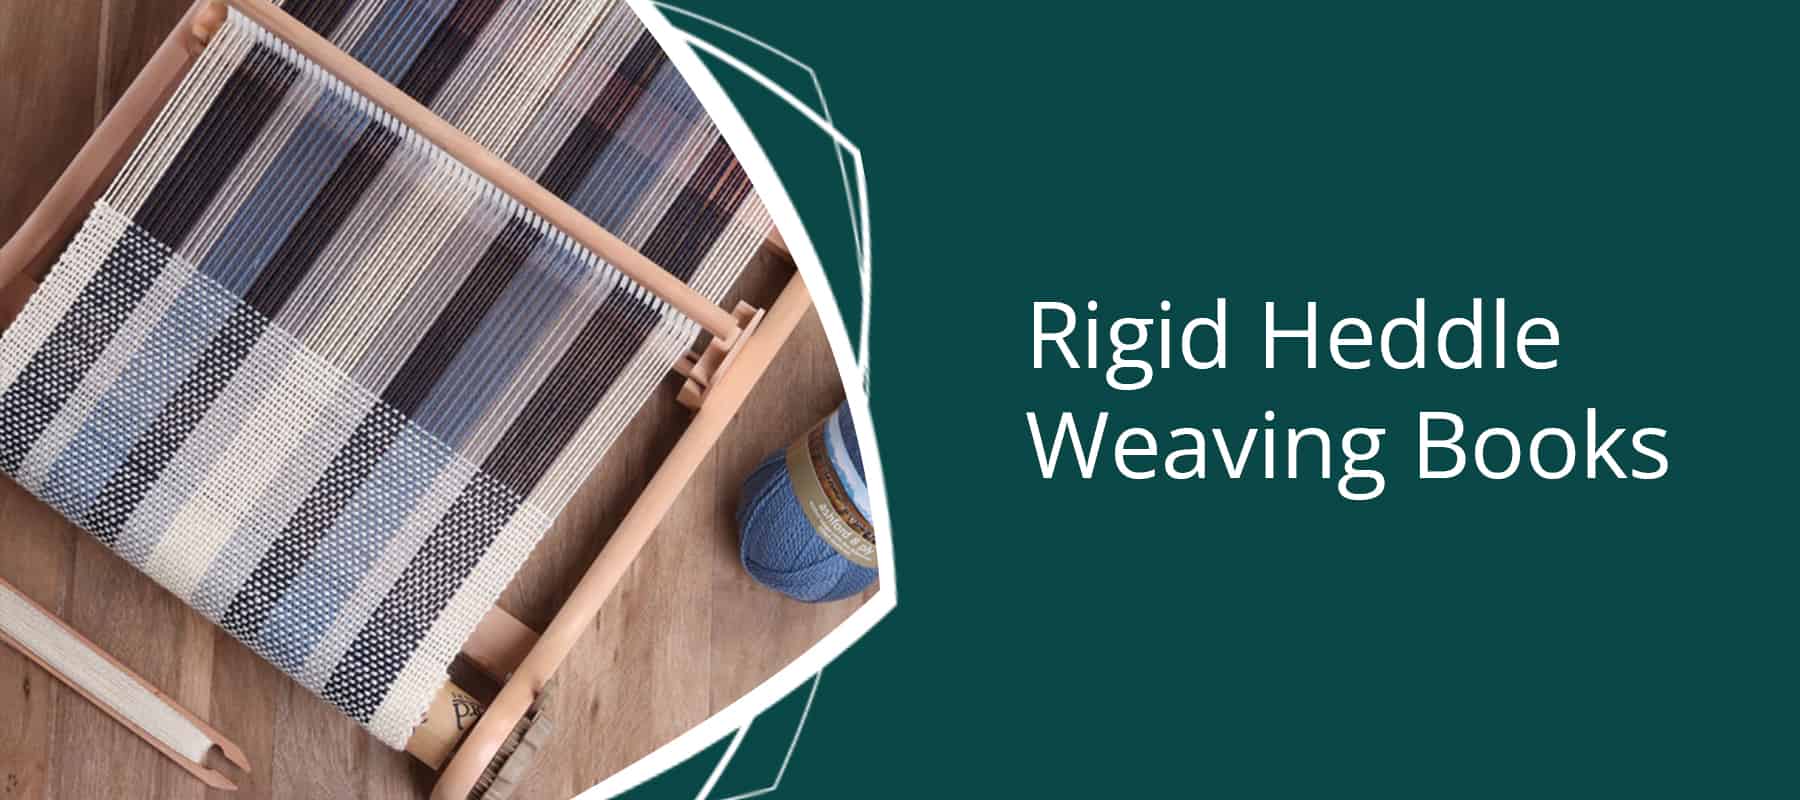 Rigid Heddle Weaving Books - Thread Collective Australia 